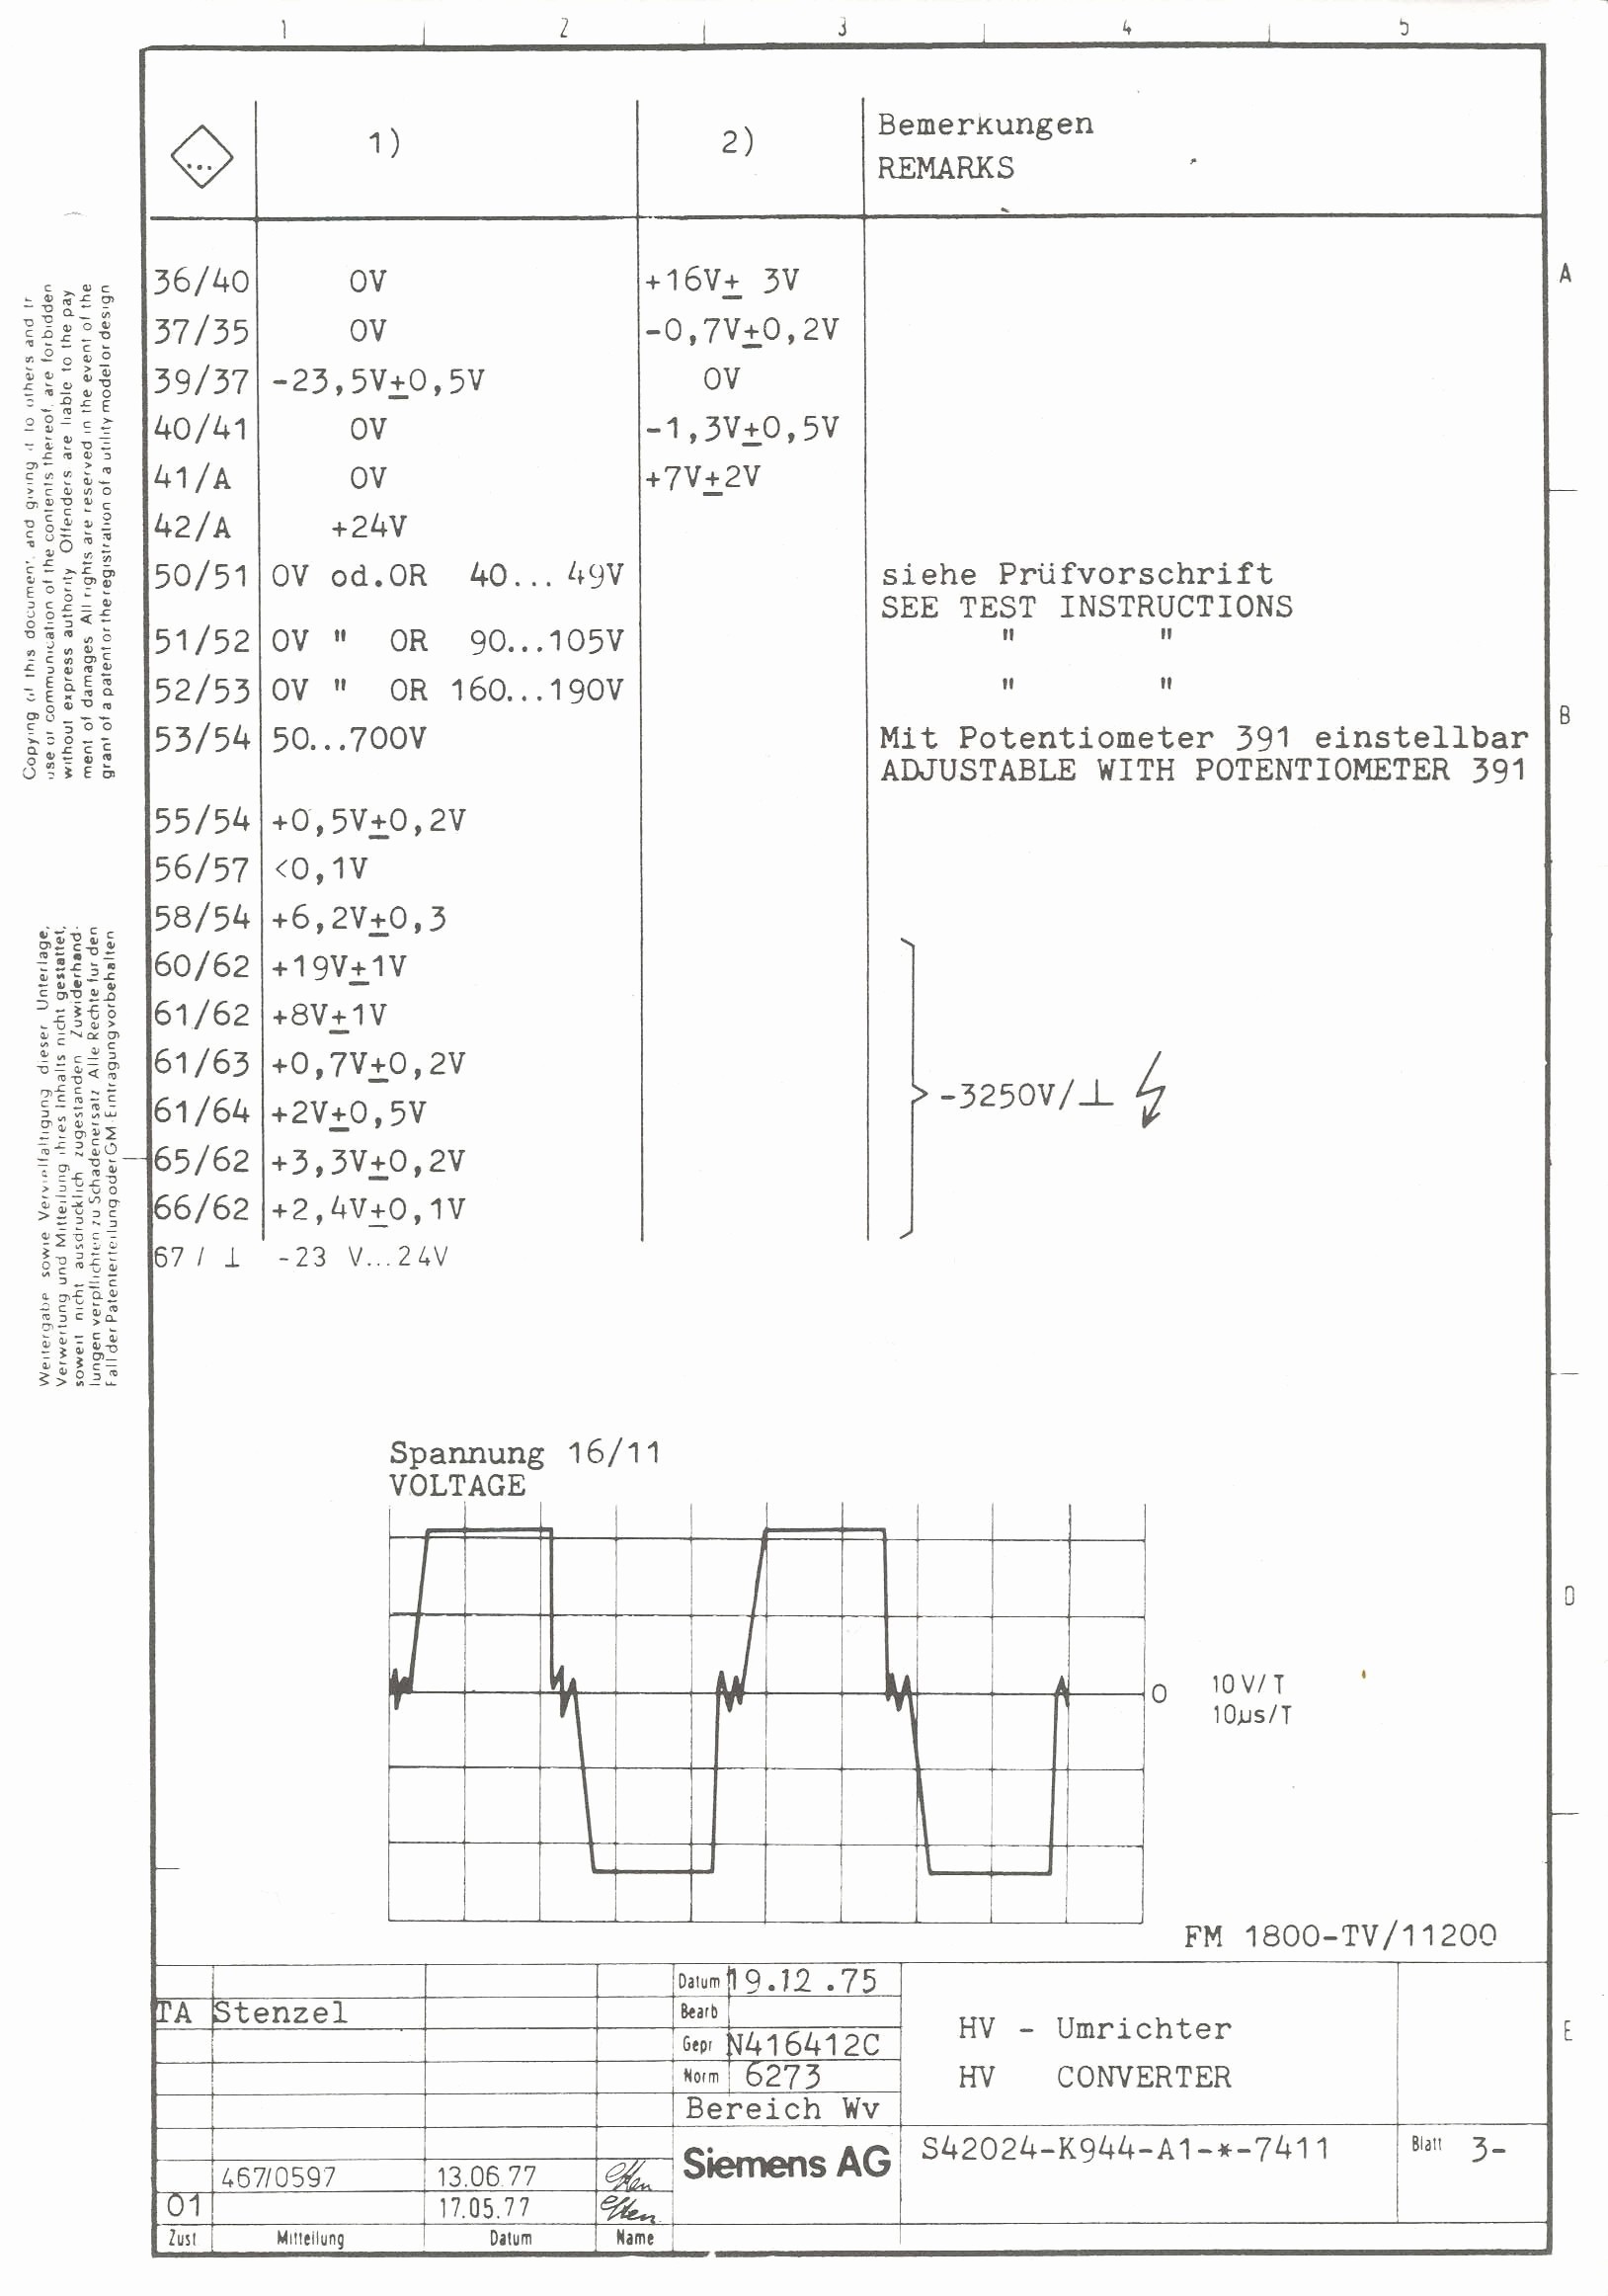 Car Amplifier Installation Diagram 6 Channel Car Amplifier Wiring Diagram Unique Reference Wiring Of Car Amplifier Installation Diagram